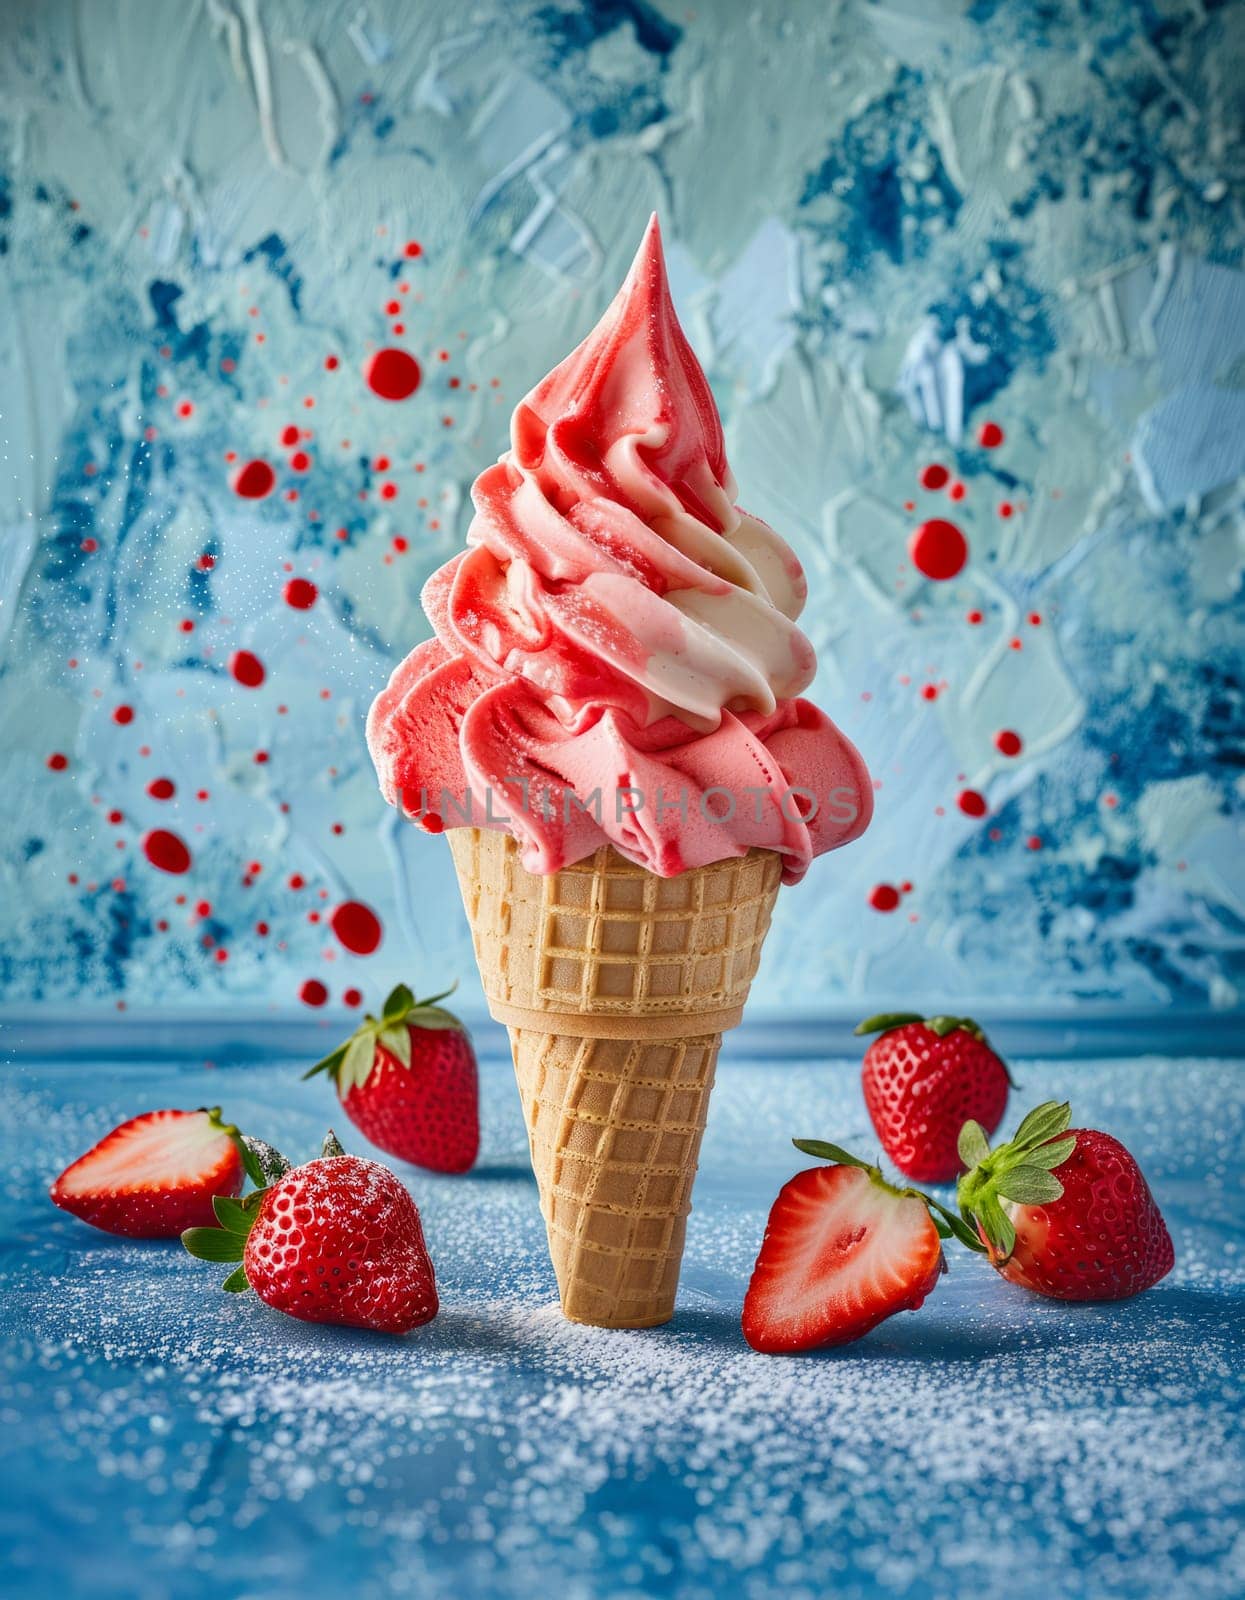 Strawberry ice cream and strawberries on blue background by NataliPopova